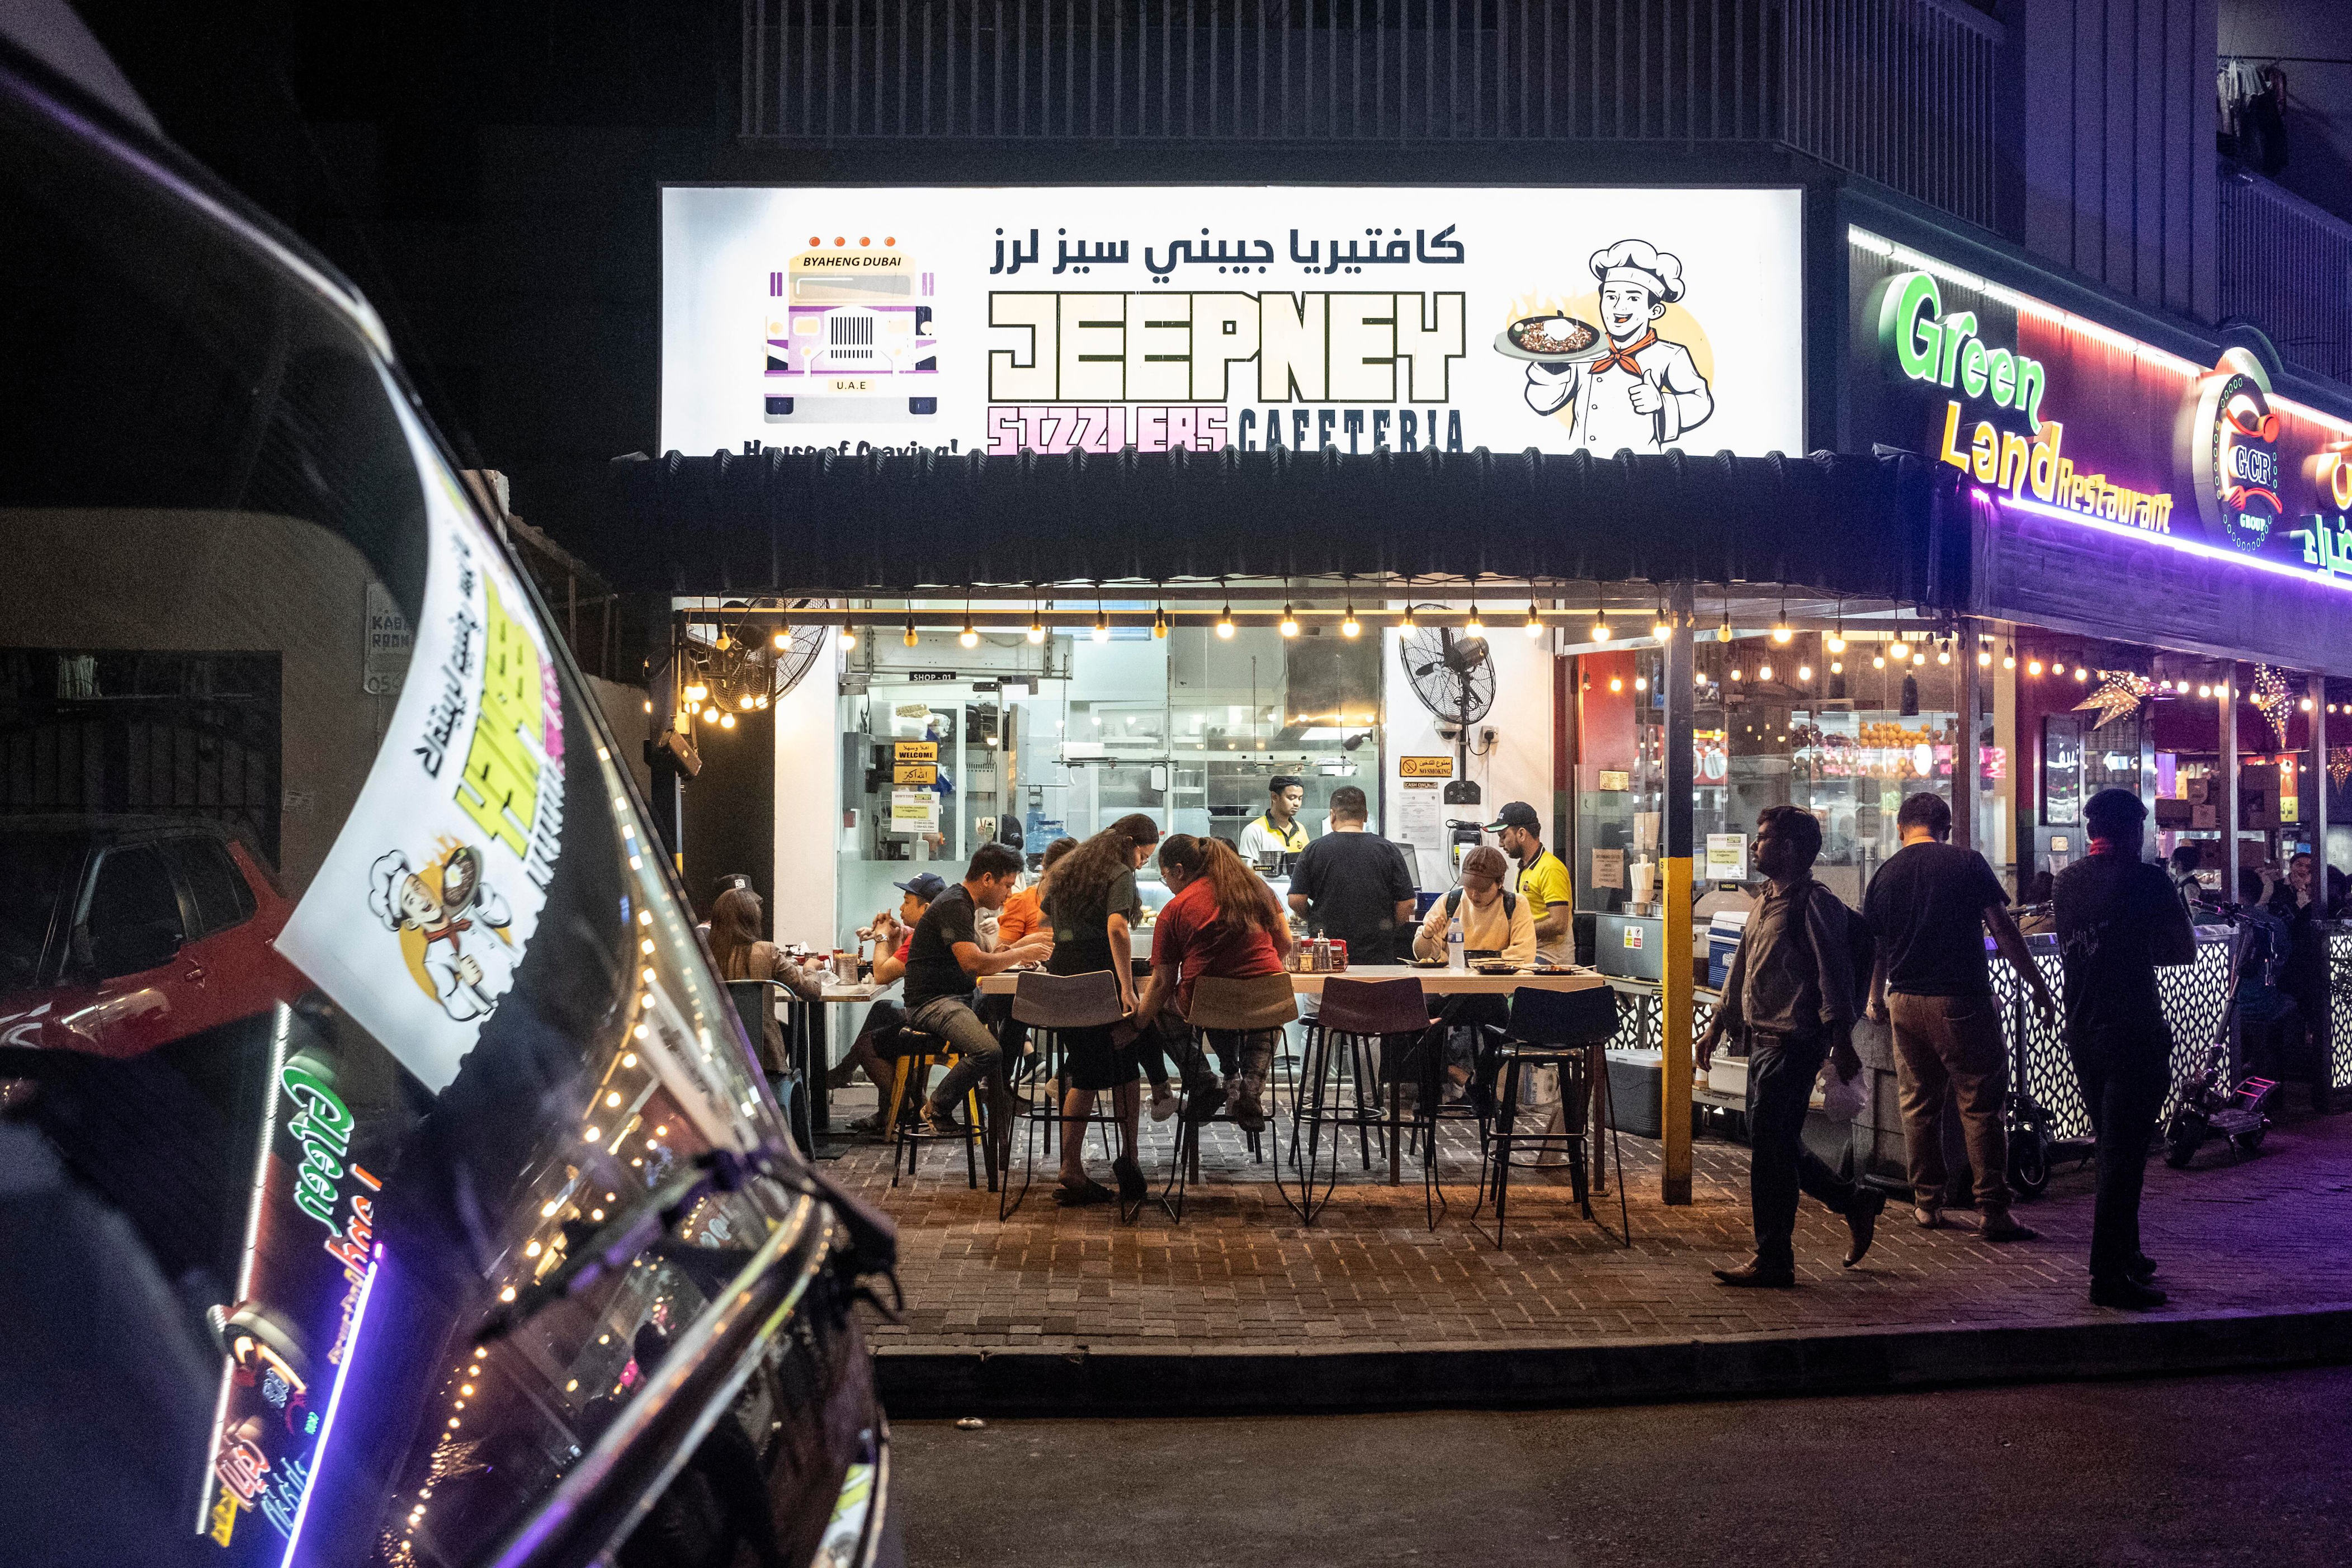 roadside kitchen in dubai transports filipinos back to manila's bustling streets